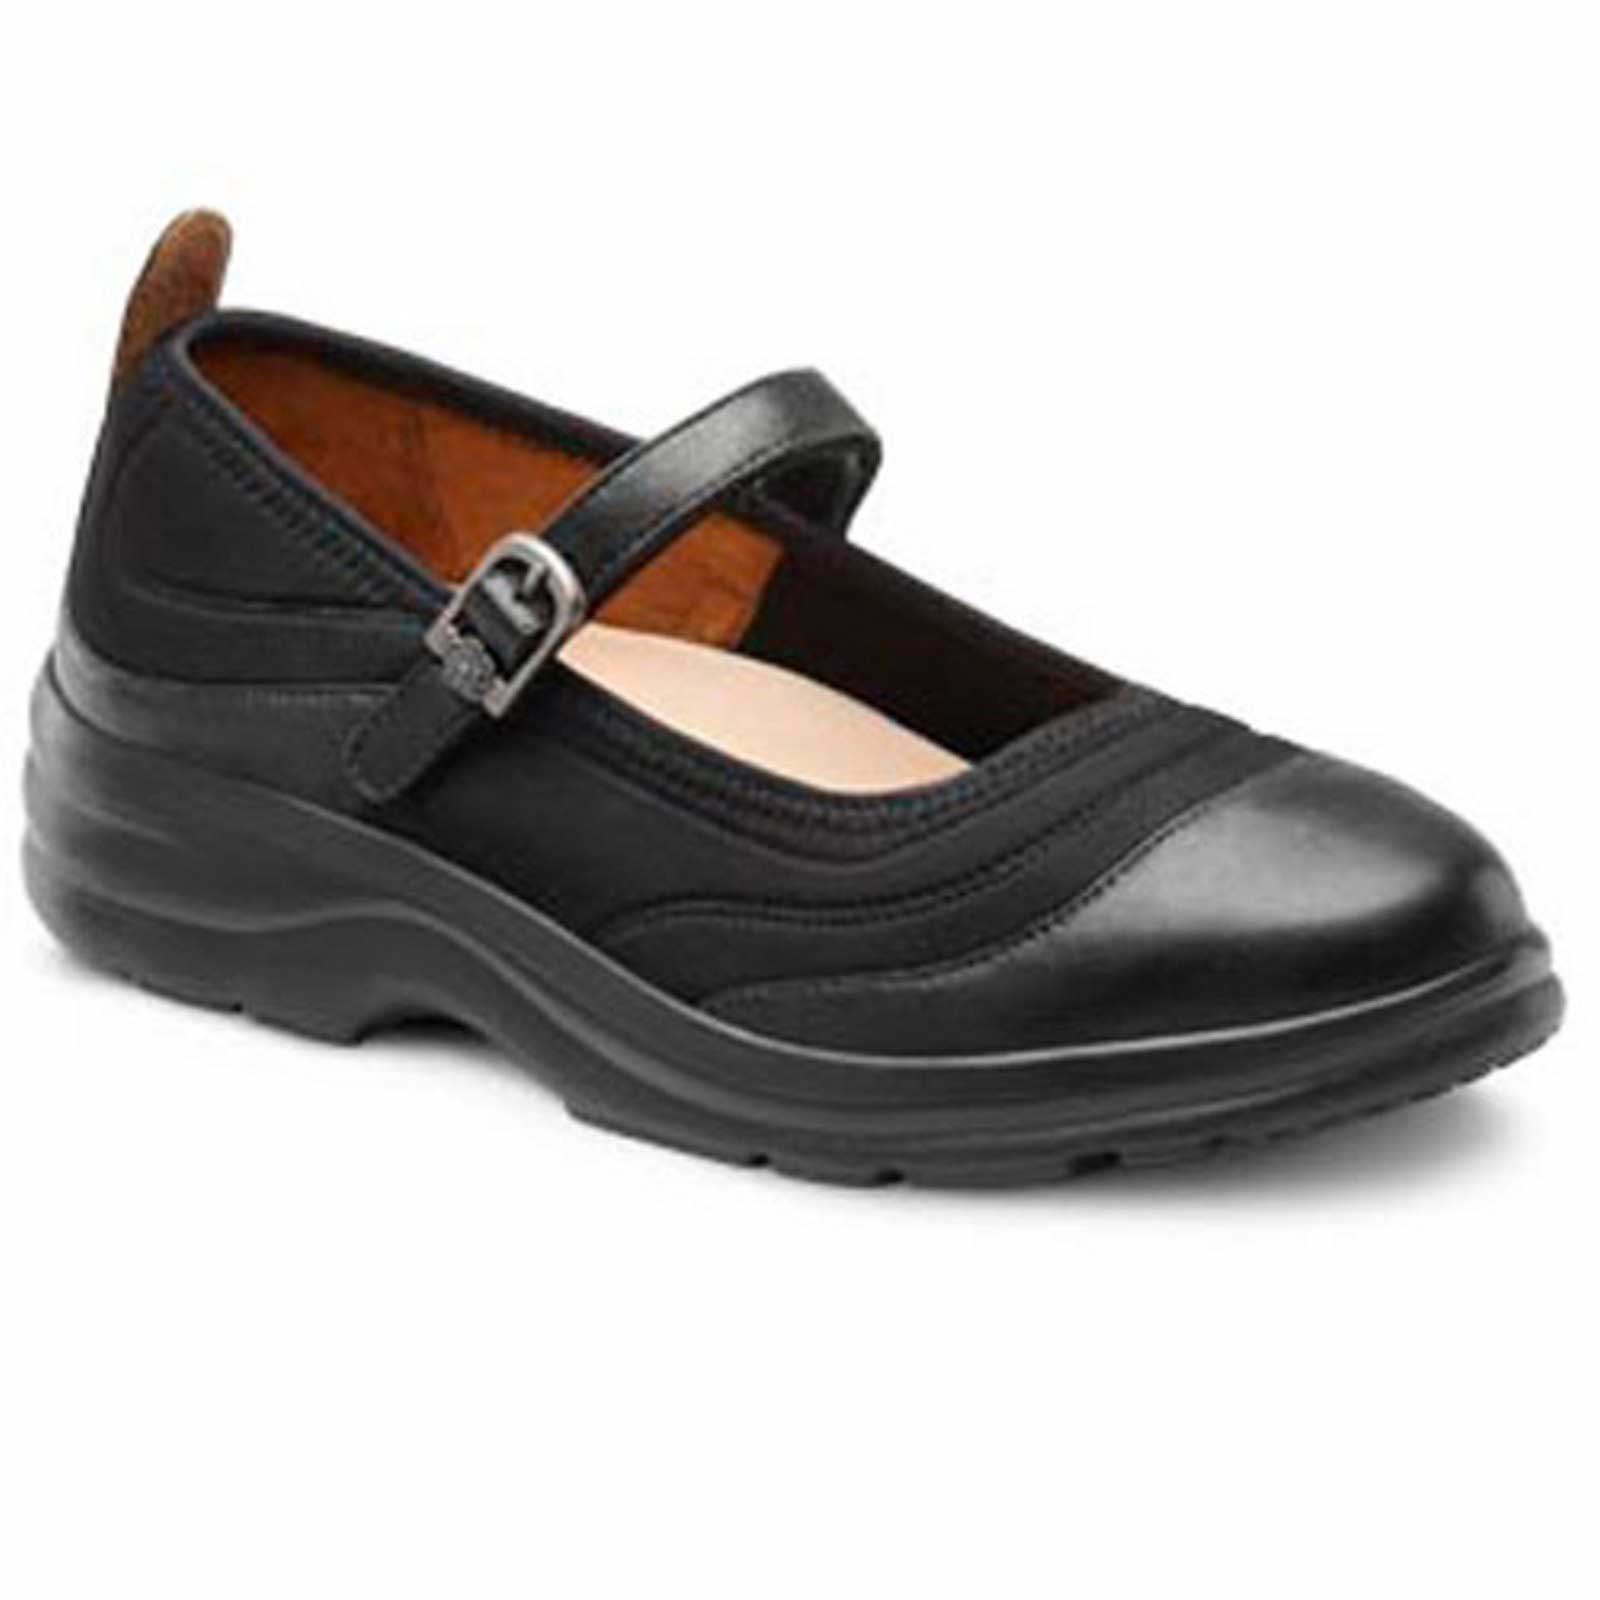 Dr. Comfort Shoes Flute Women's Casual & Dress Shoe - Comfort Orthopedic Diabetic Shoe Dress - Extra Depth - Extra Wide